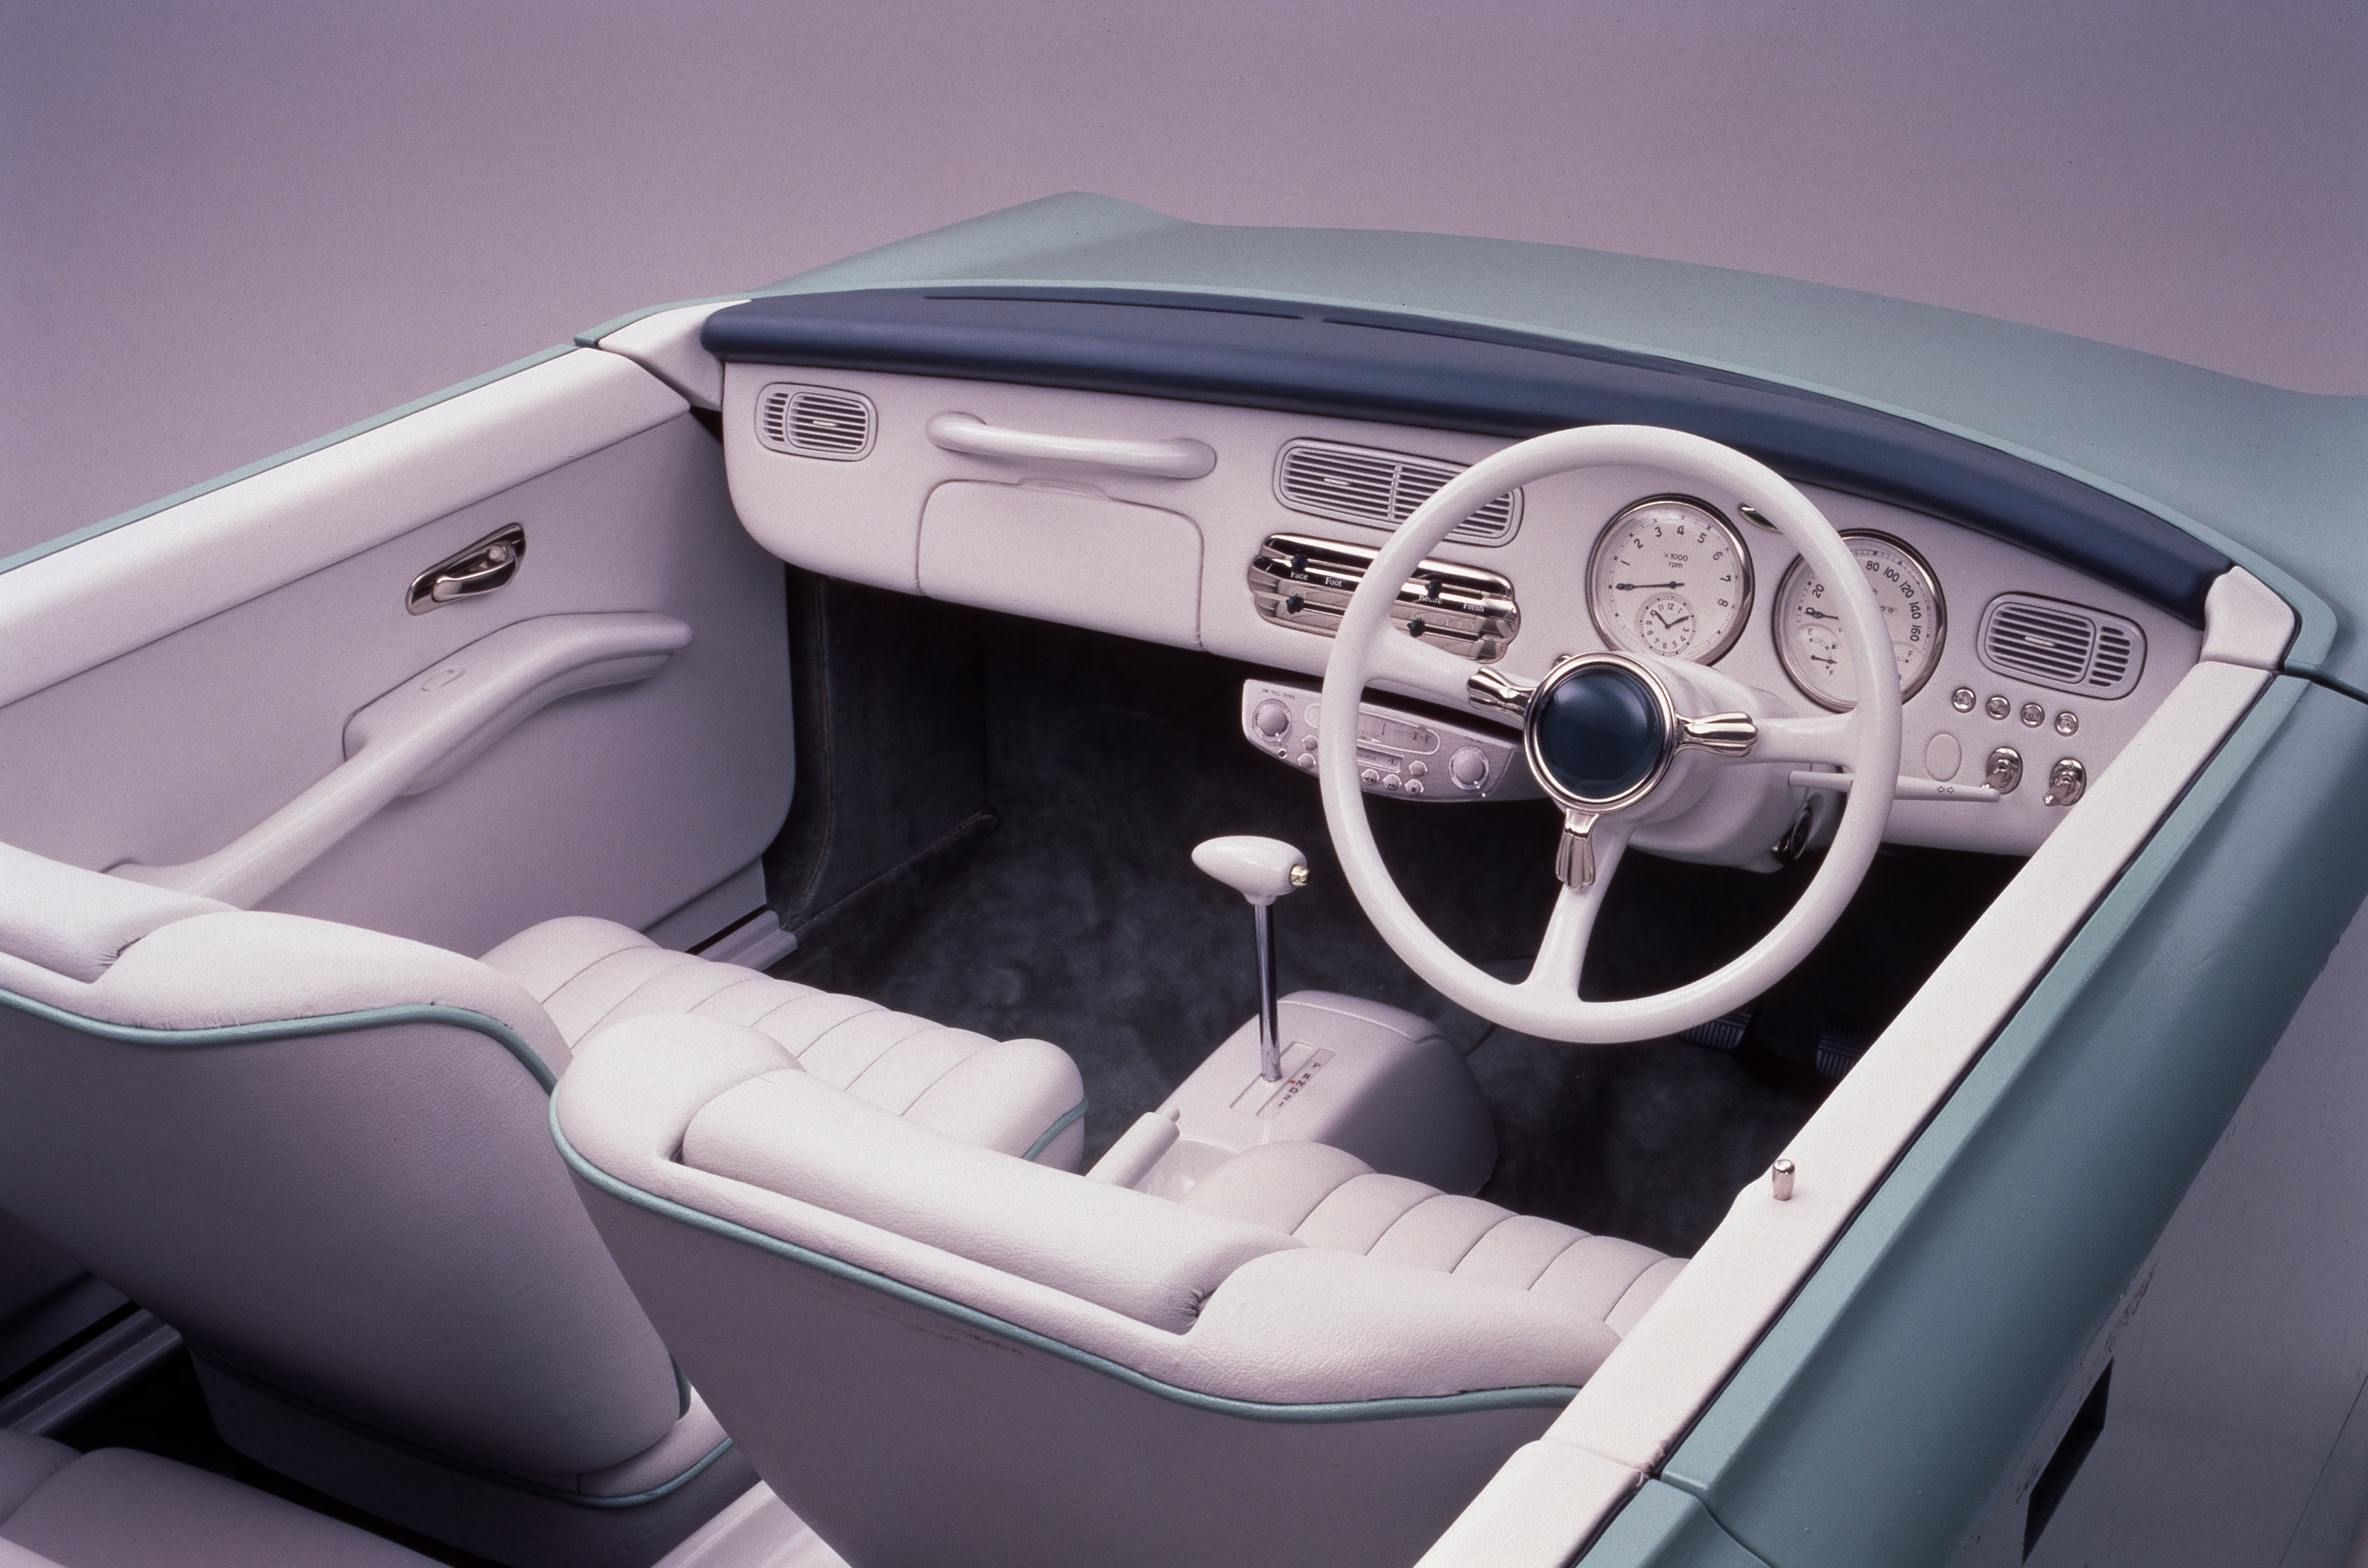 Nissan Figaro Concept, 1989 - Interior